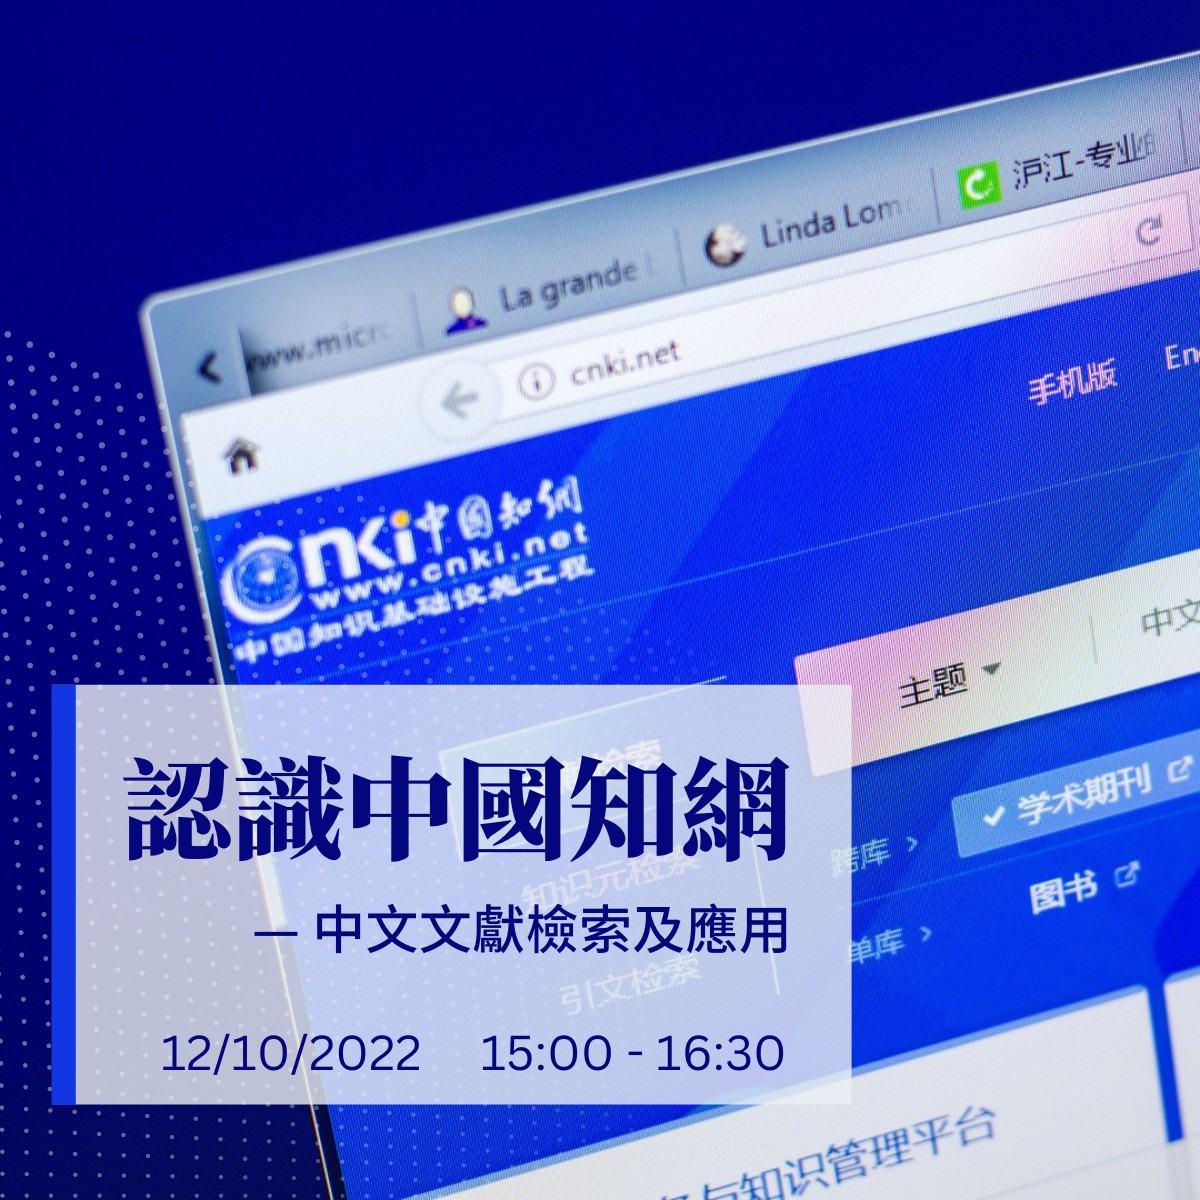 EMERALD WEBINAR 網絡研討會: 認識中國知網 — 中文文獻檢索及應用